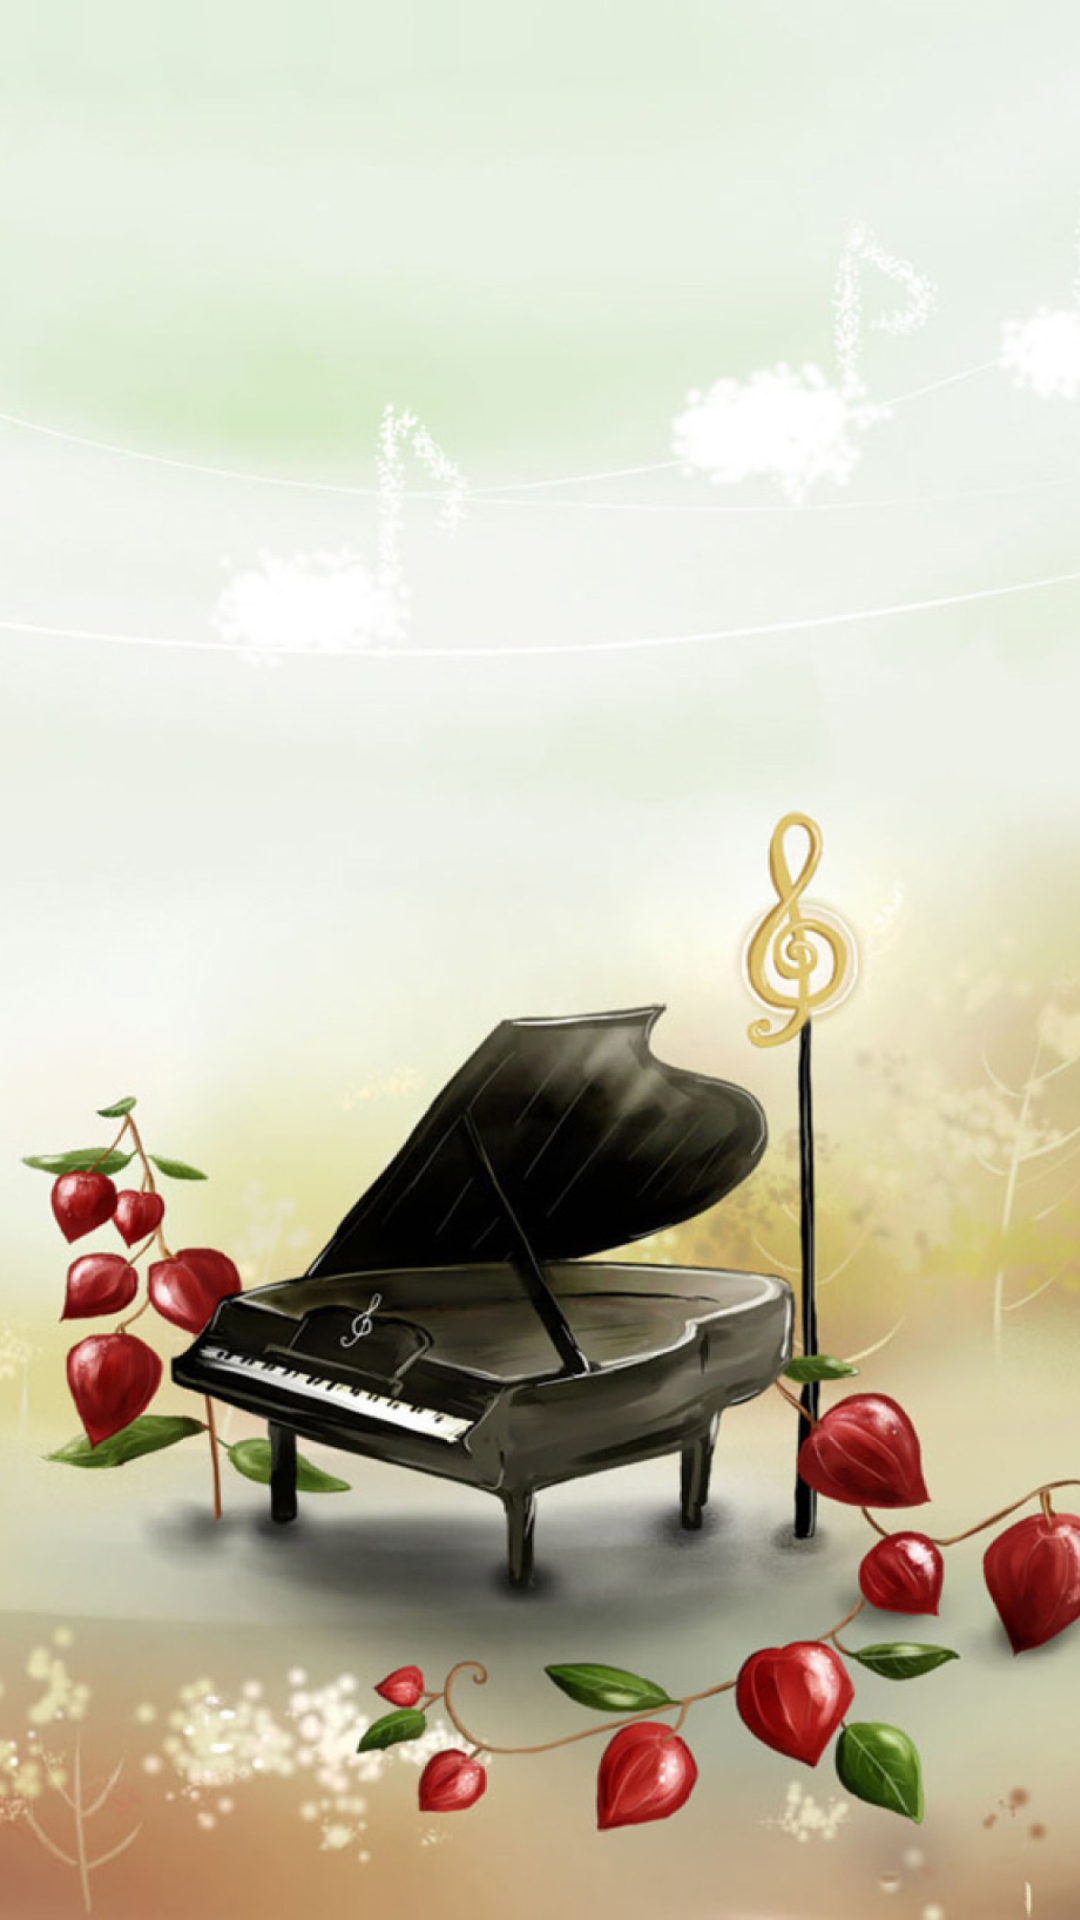 Das Piano And Notes Wallpaper 1080x1920